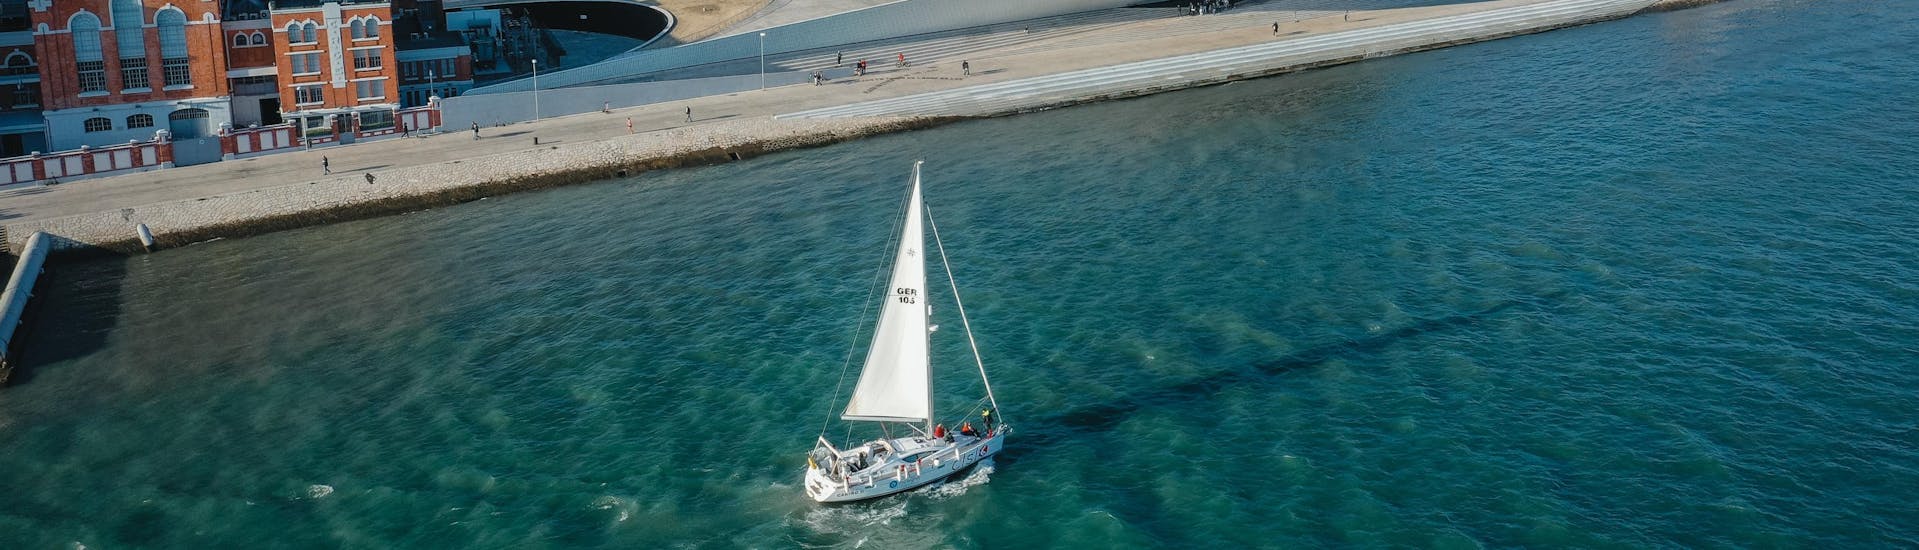 Gita privata in barca a vela da Doca de Alcântara a Tago con visita turistica.